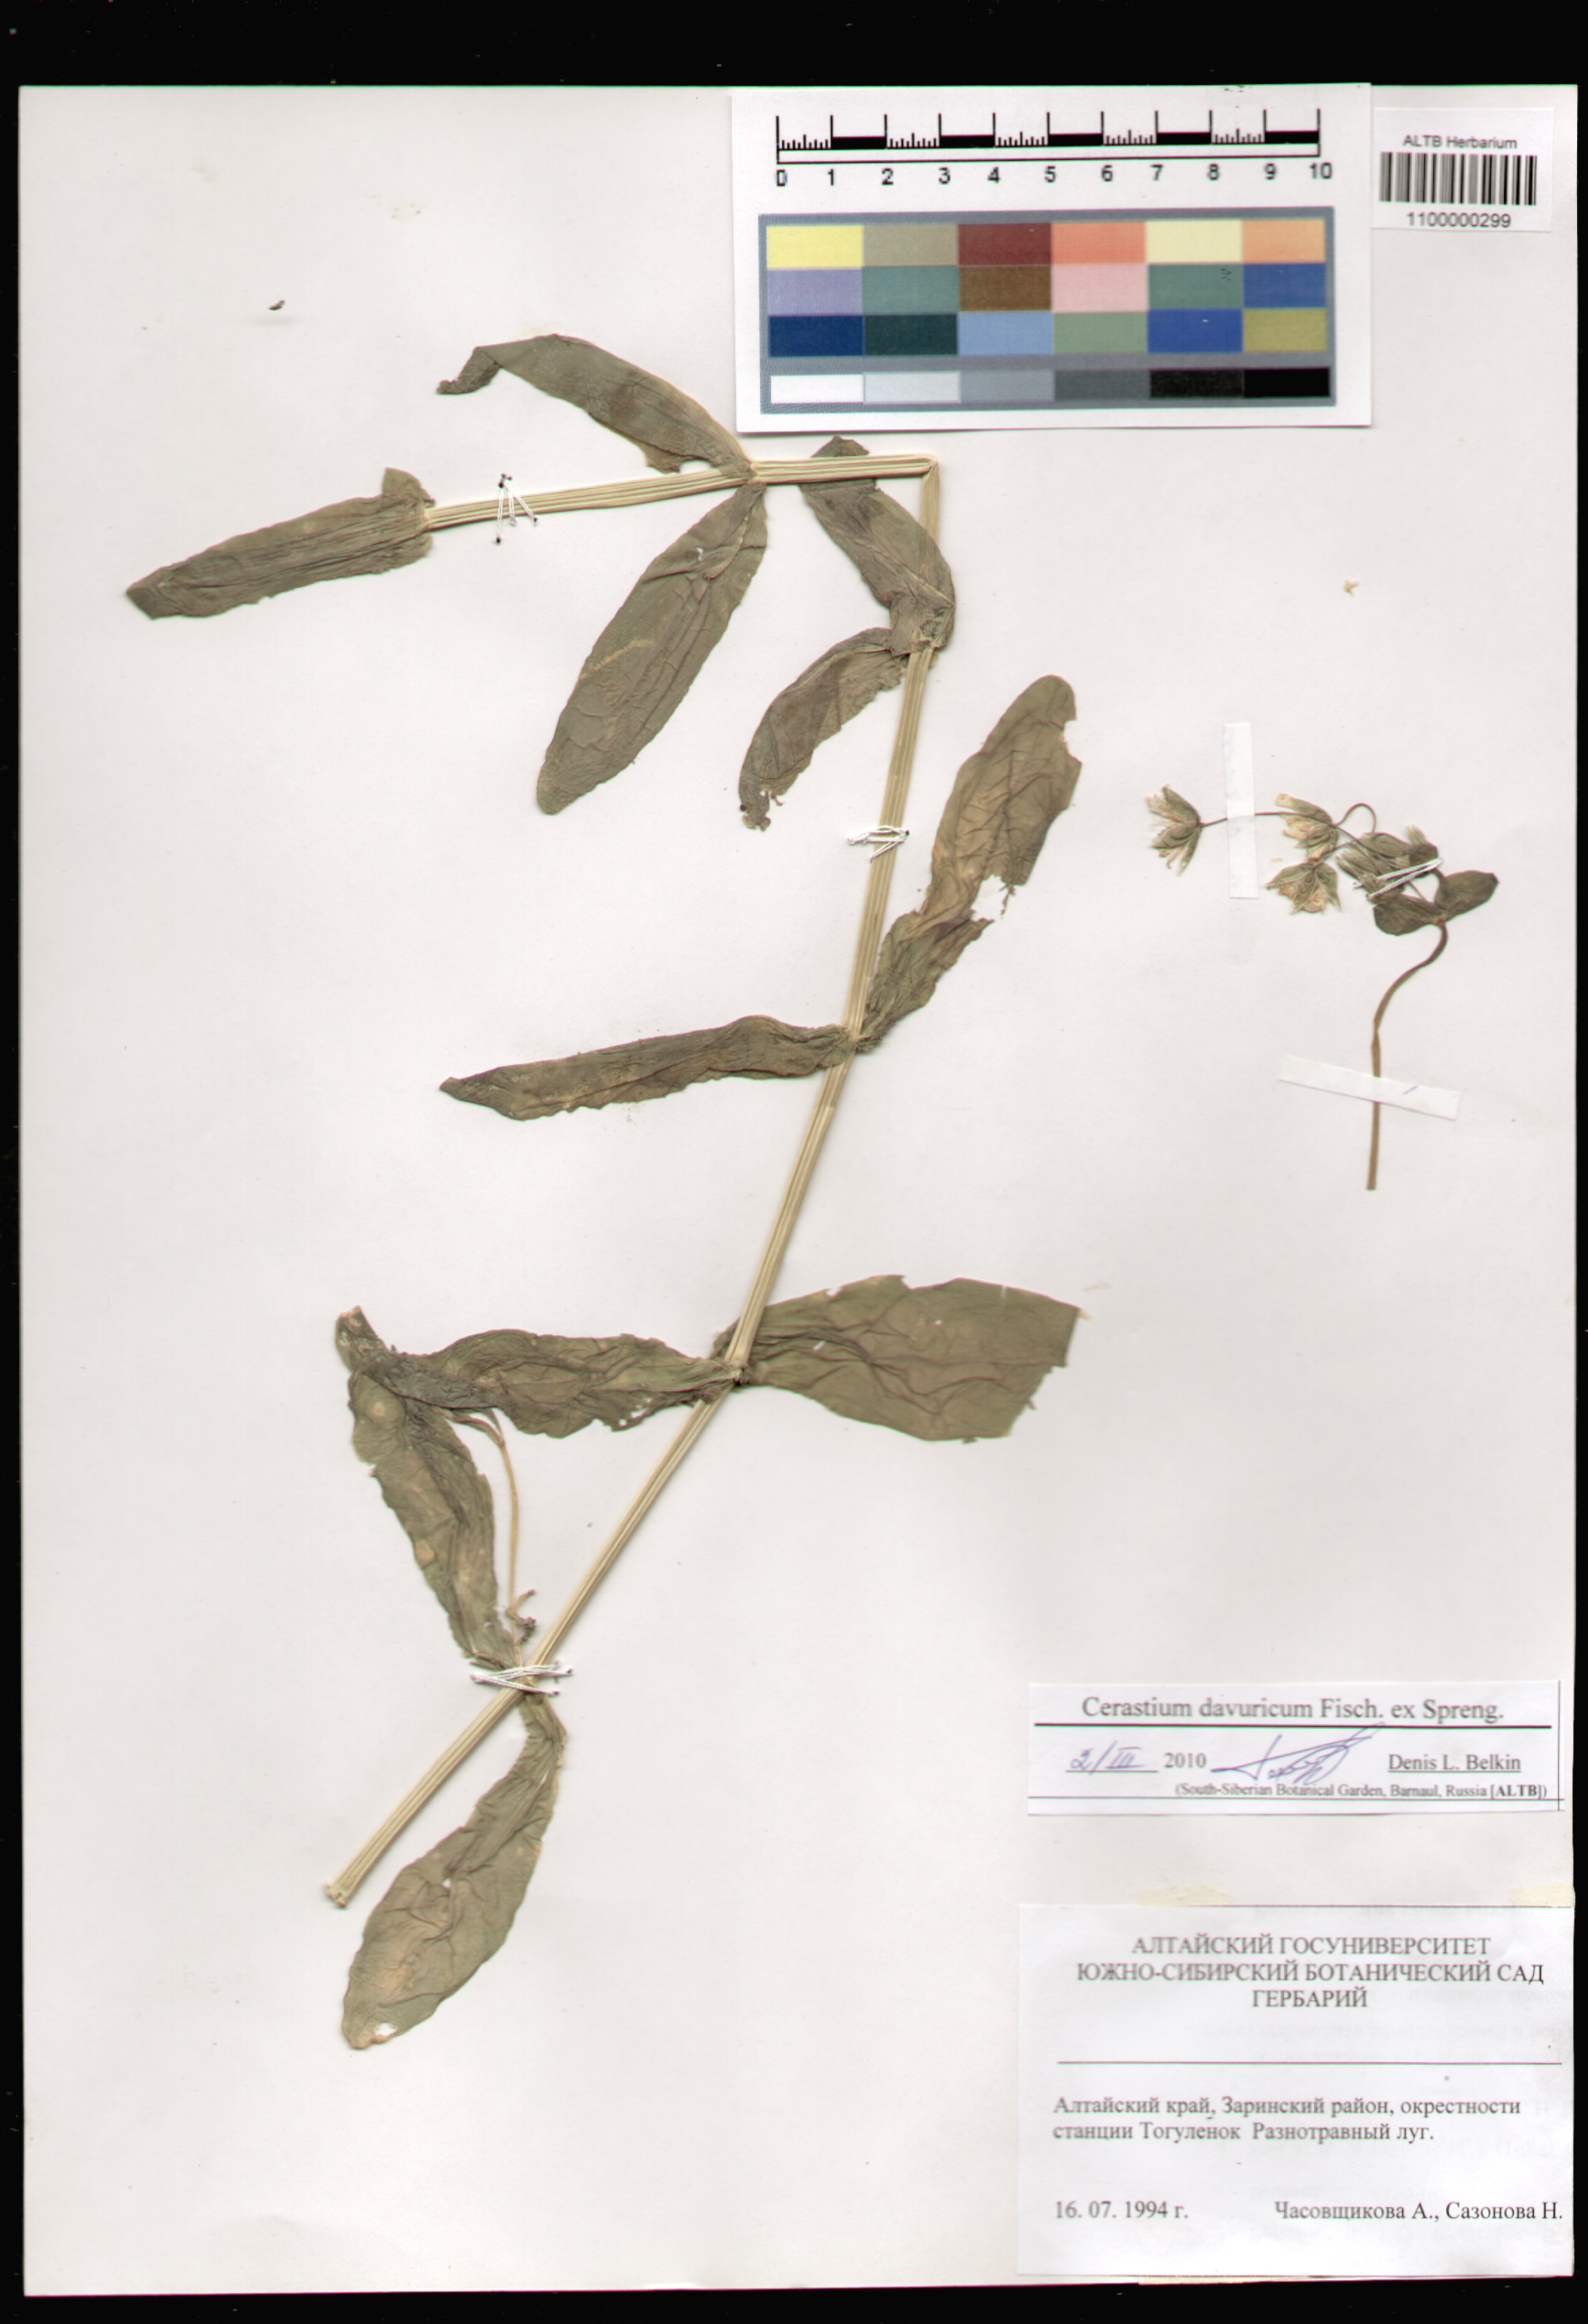 Caryophyllaceae,Cerastium davuricum Fisch. ex Spreng.